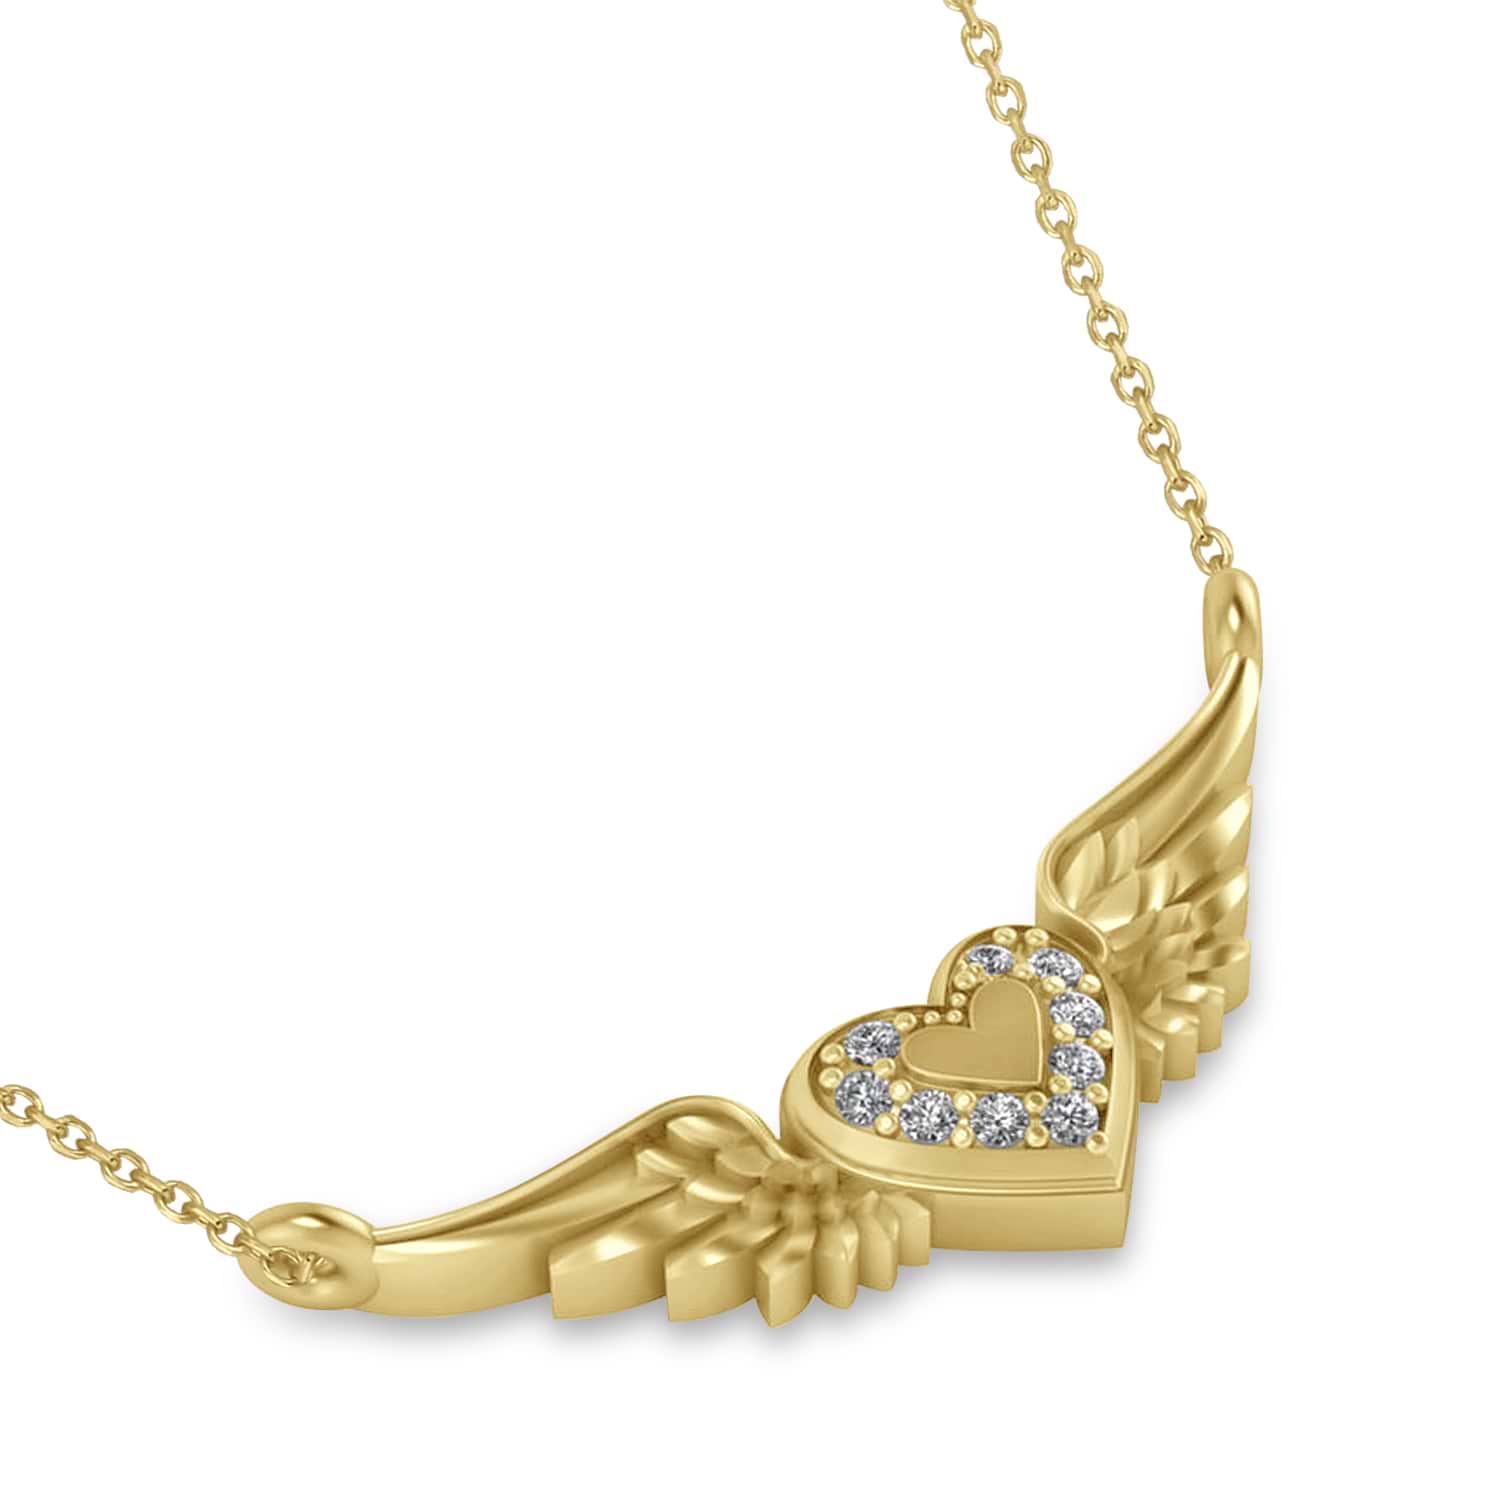 Diamond Heart & Angel Wings Pendant Necklace 14k Yellow Gold (0.05ct)